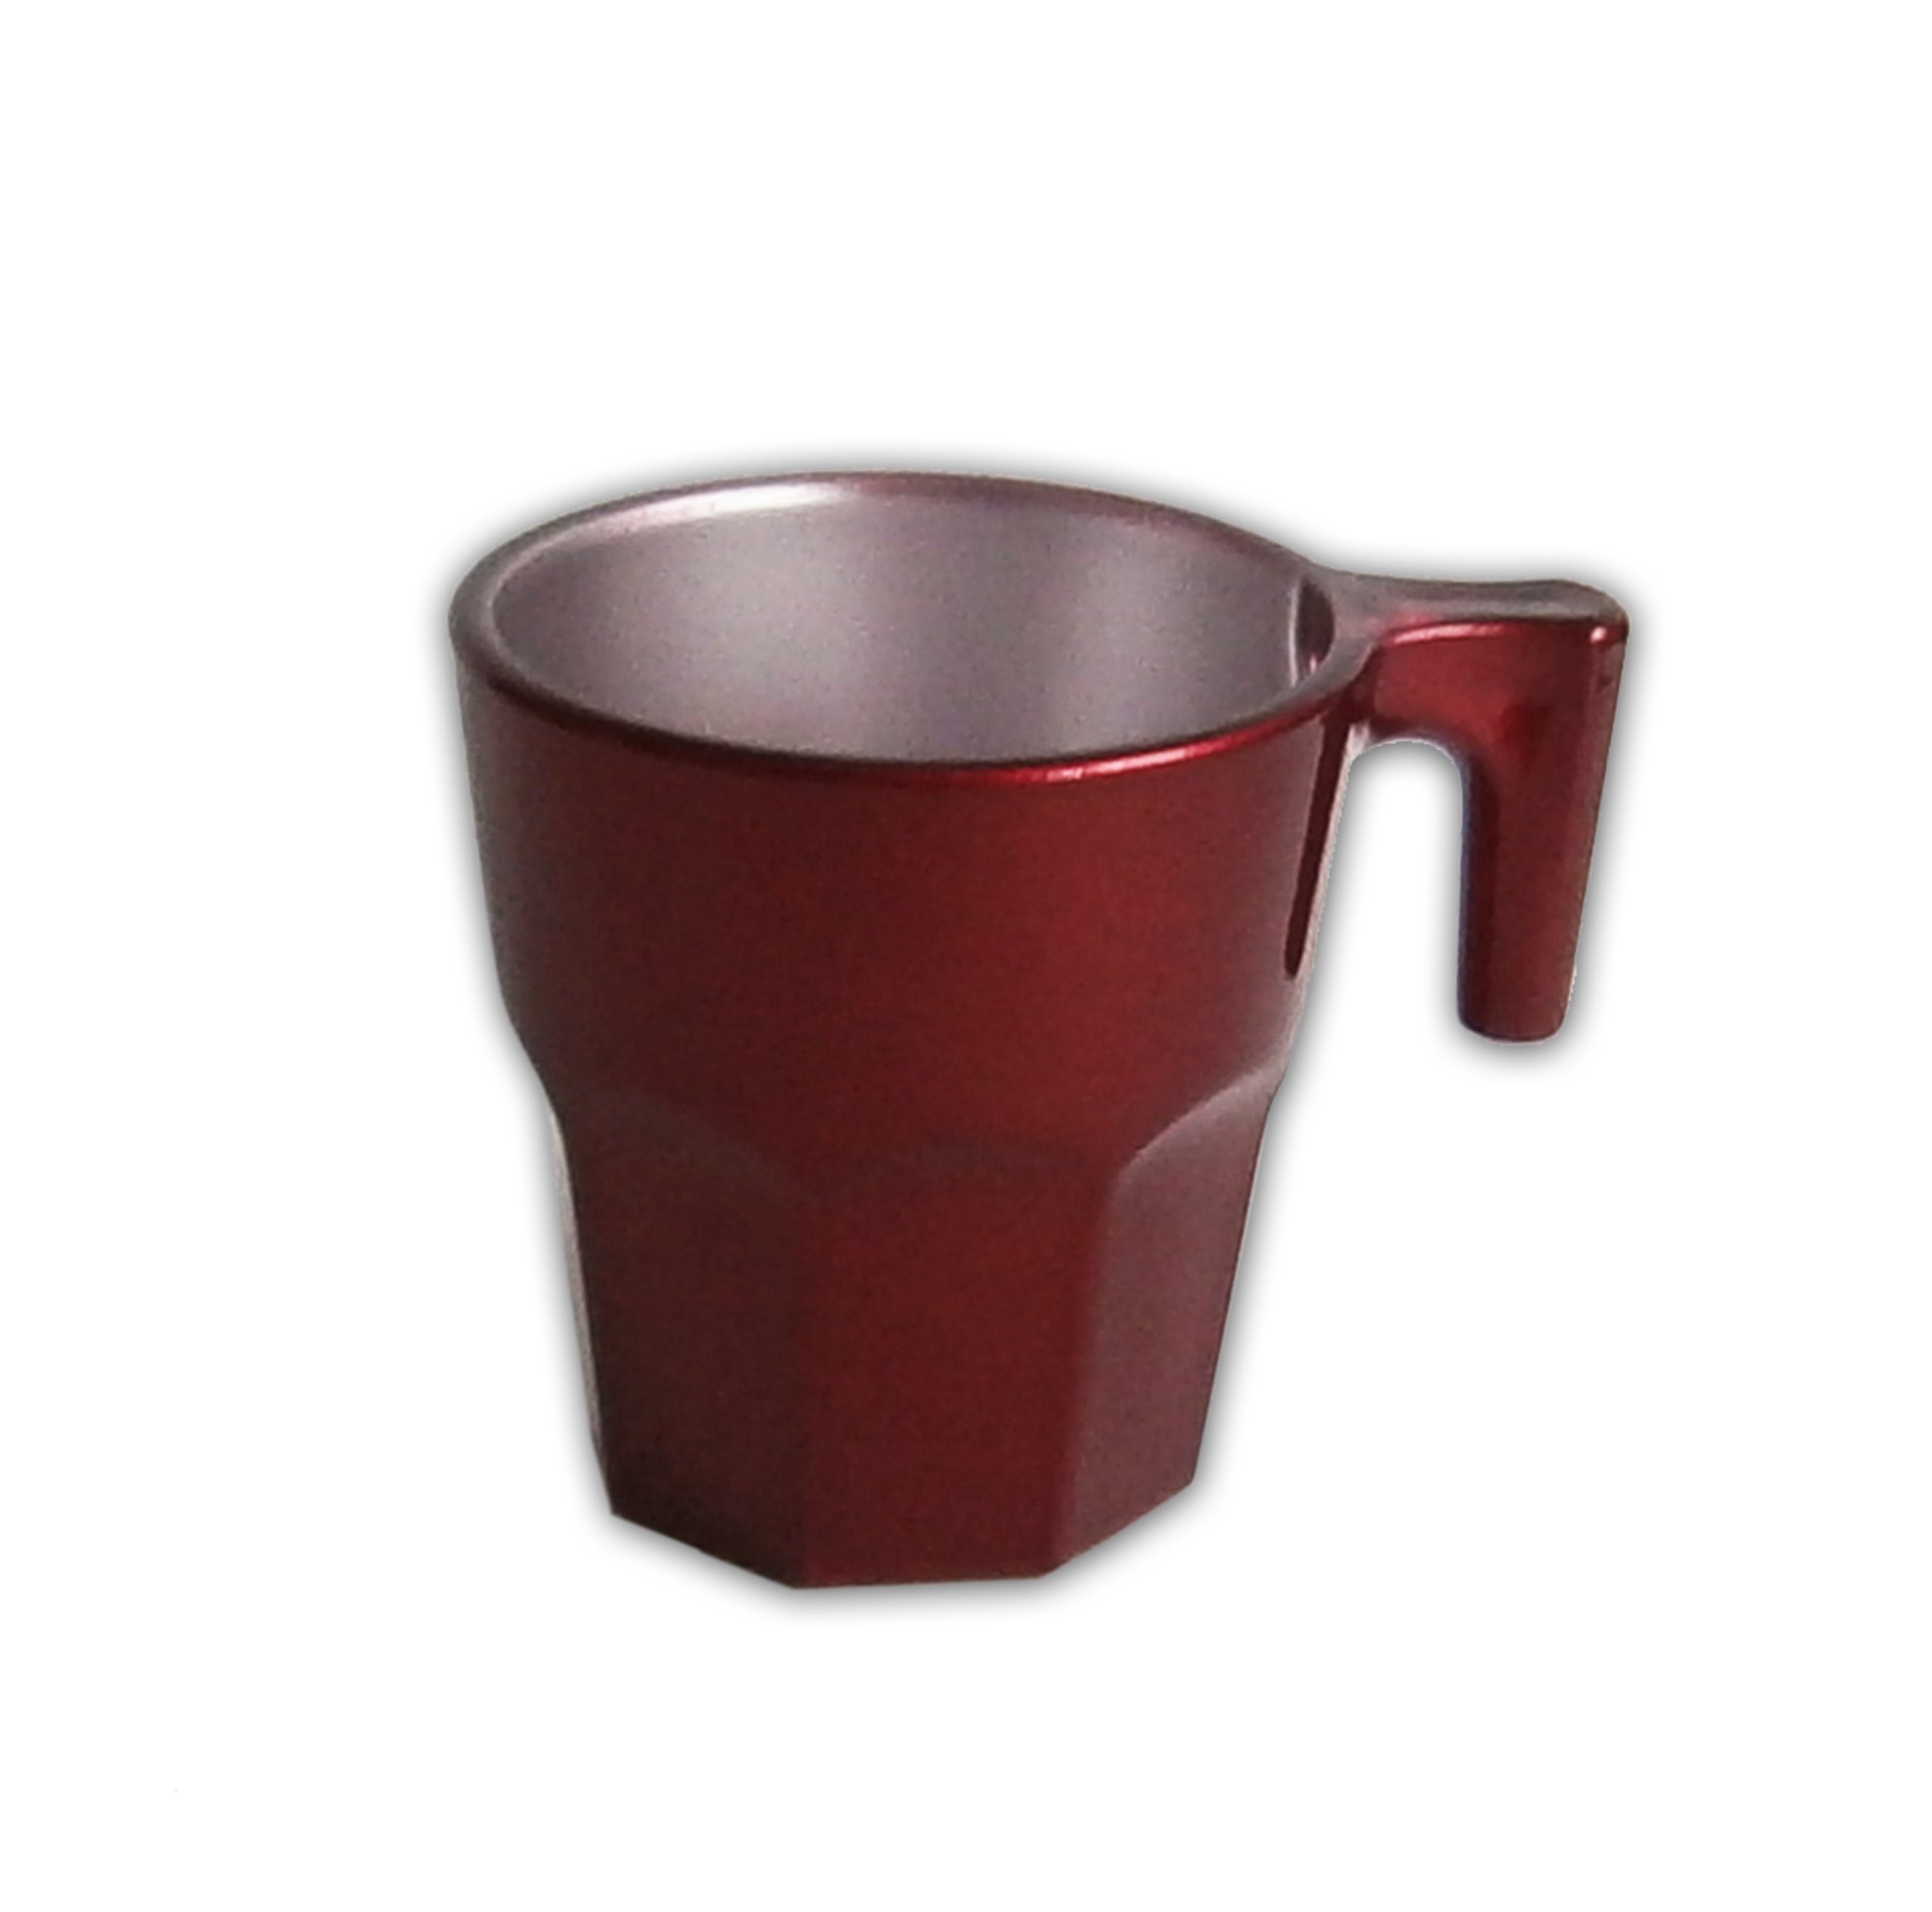 50 Henkel Kaffeebecher KAFFEETASSE mit Metallic Casablanca Becher Tee Tasse Tasse 4x (Dunkelrot-Metallic), Glas